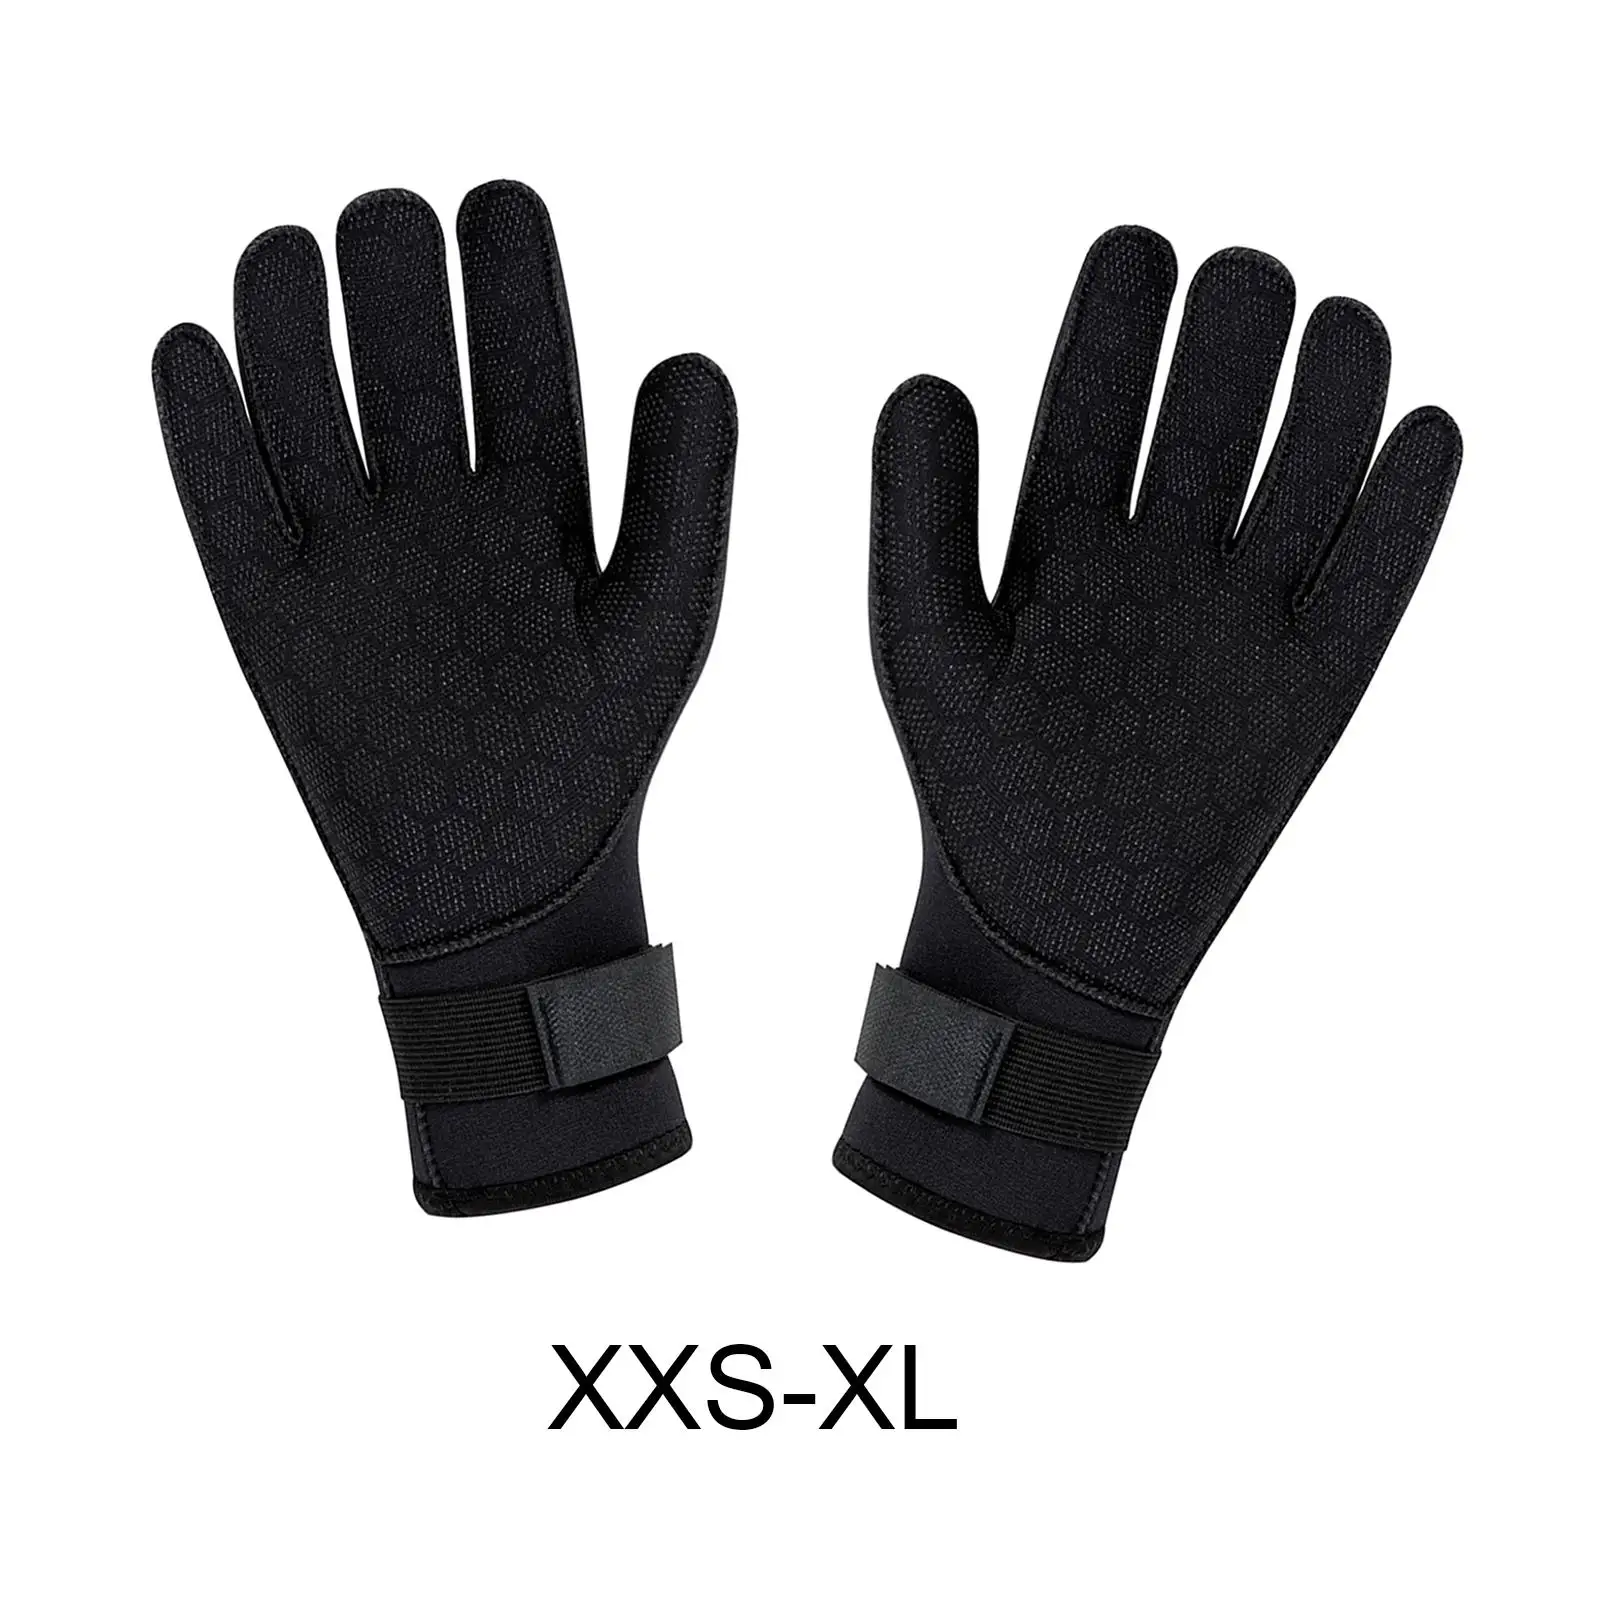 Scuba Diving Gloves Neoprene Gloves Wetsuit Gloves With Adjustable Strap